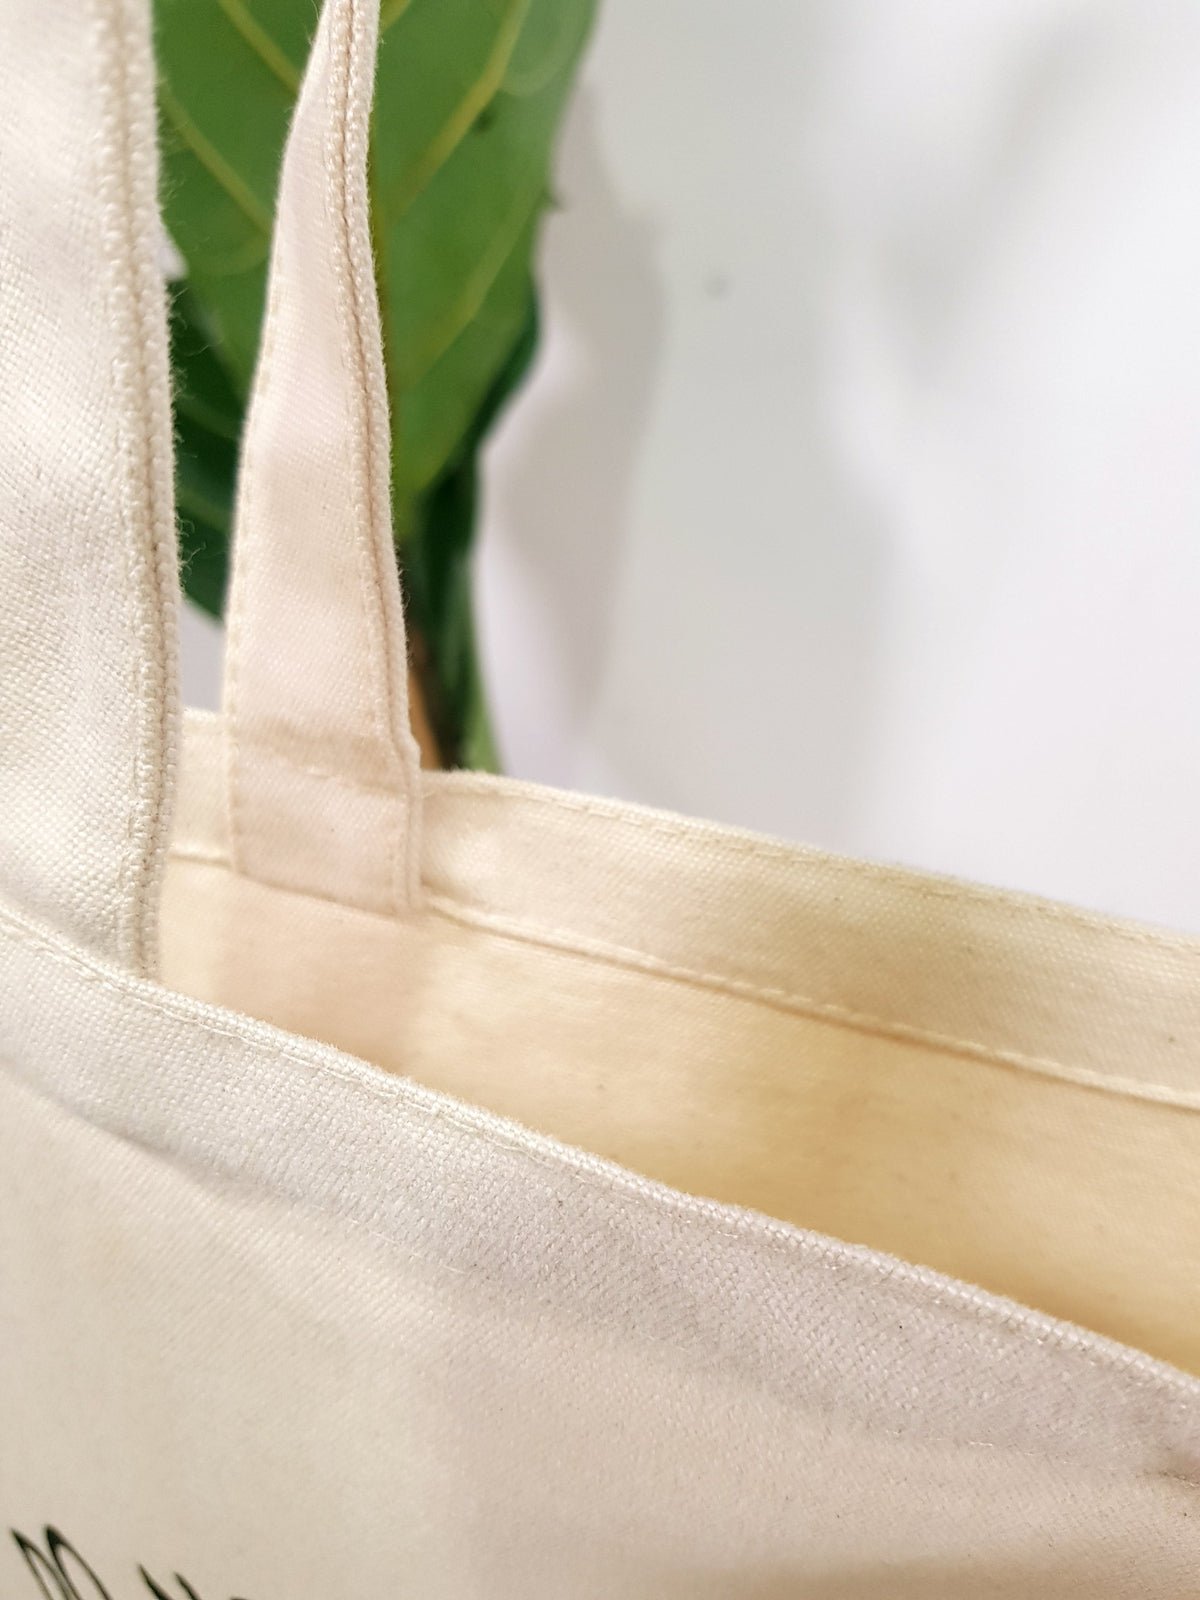 rage premium tote bag organic cotton te koop in de webshop van Almost Summer Amsterdam